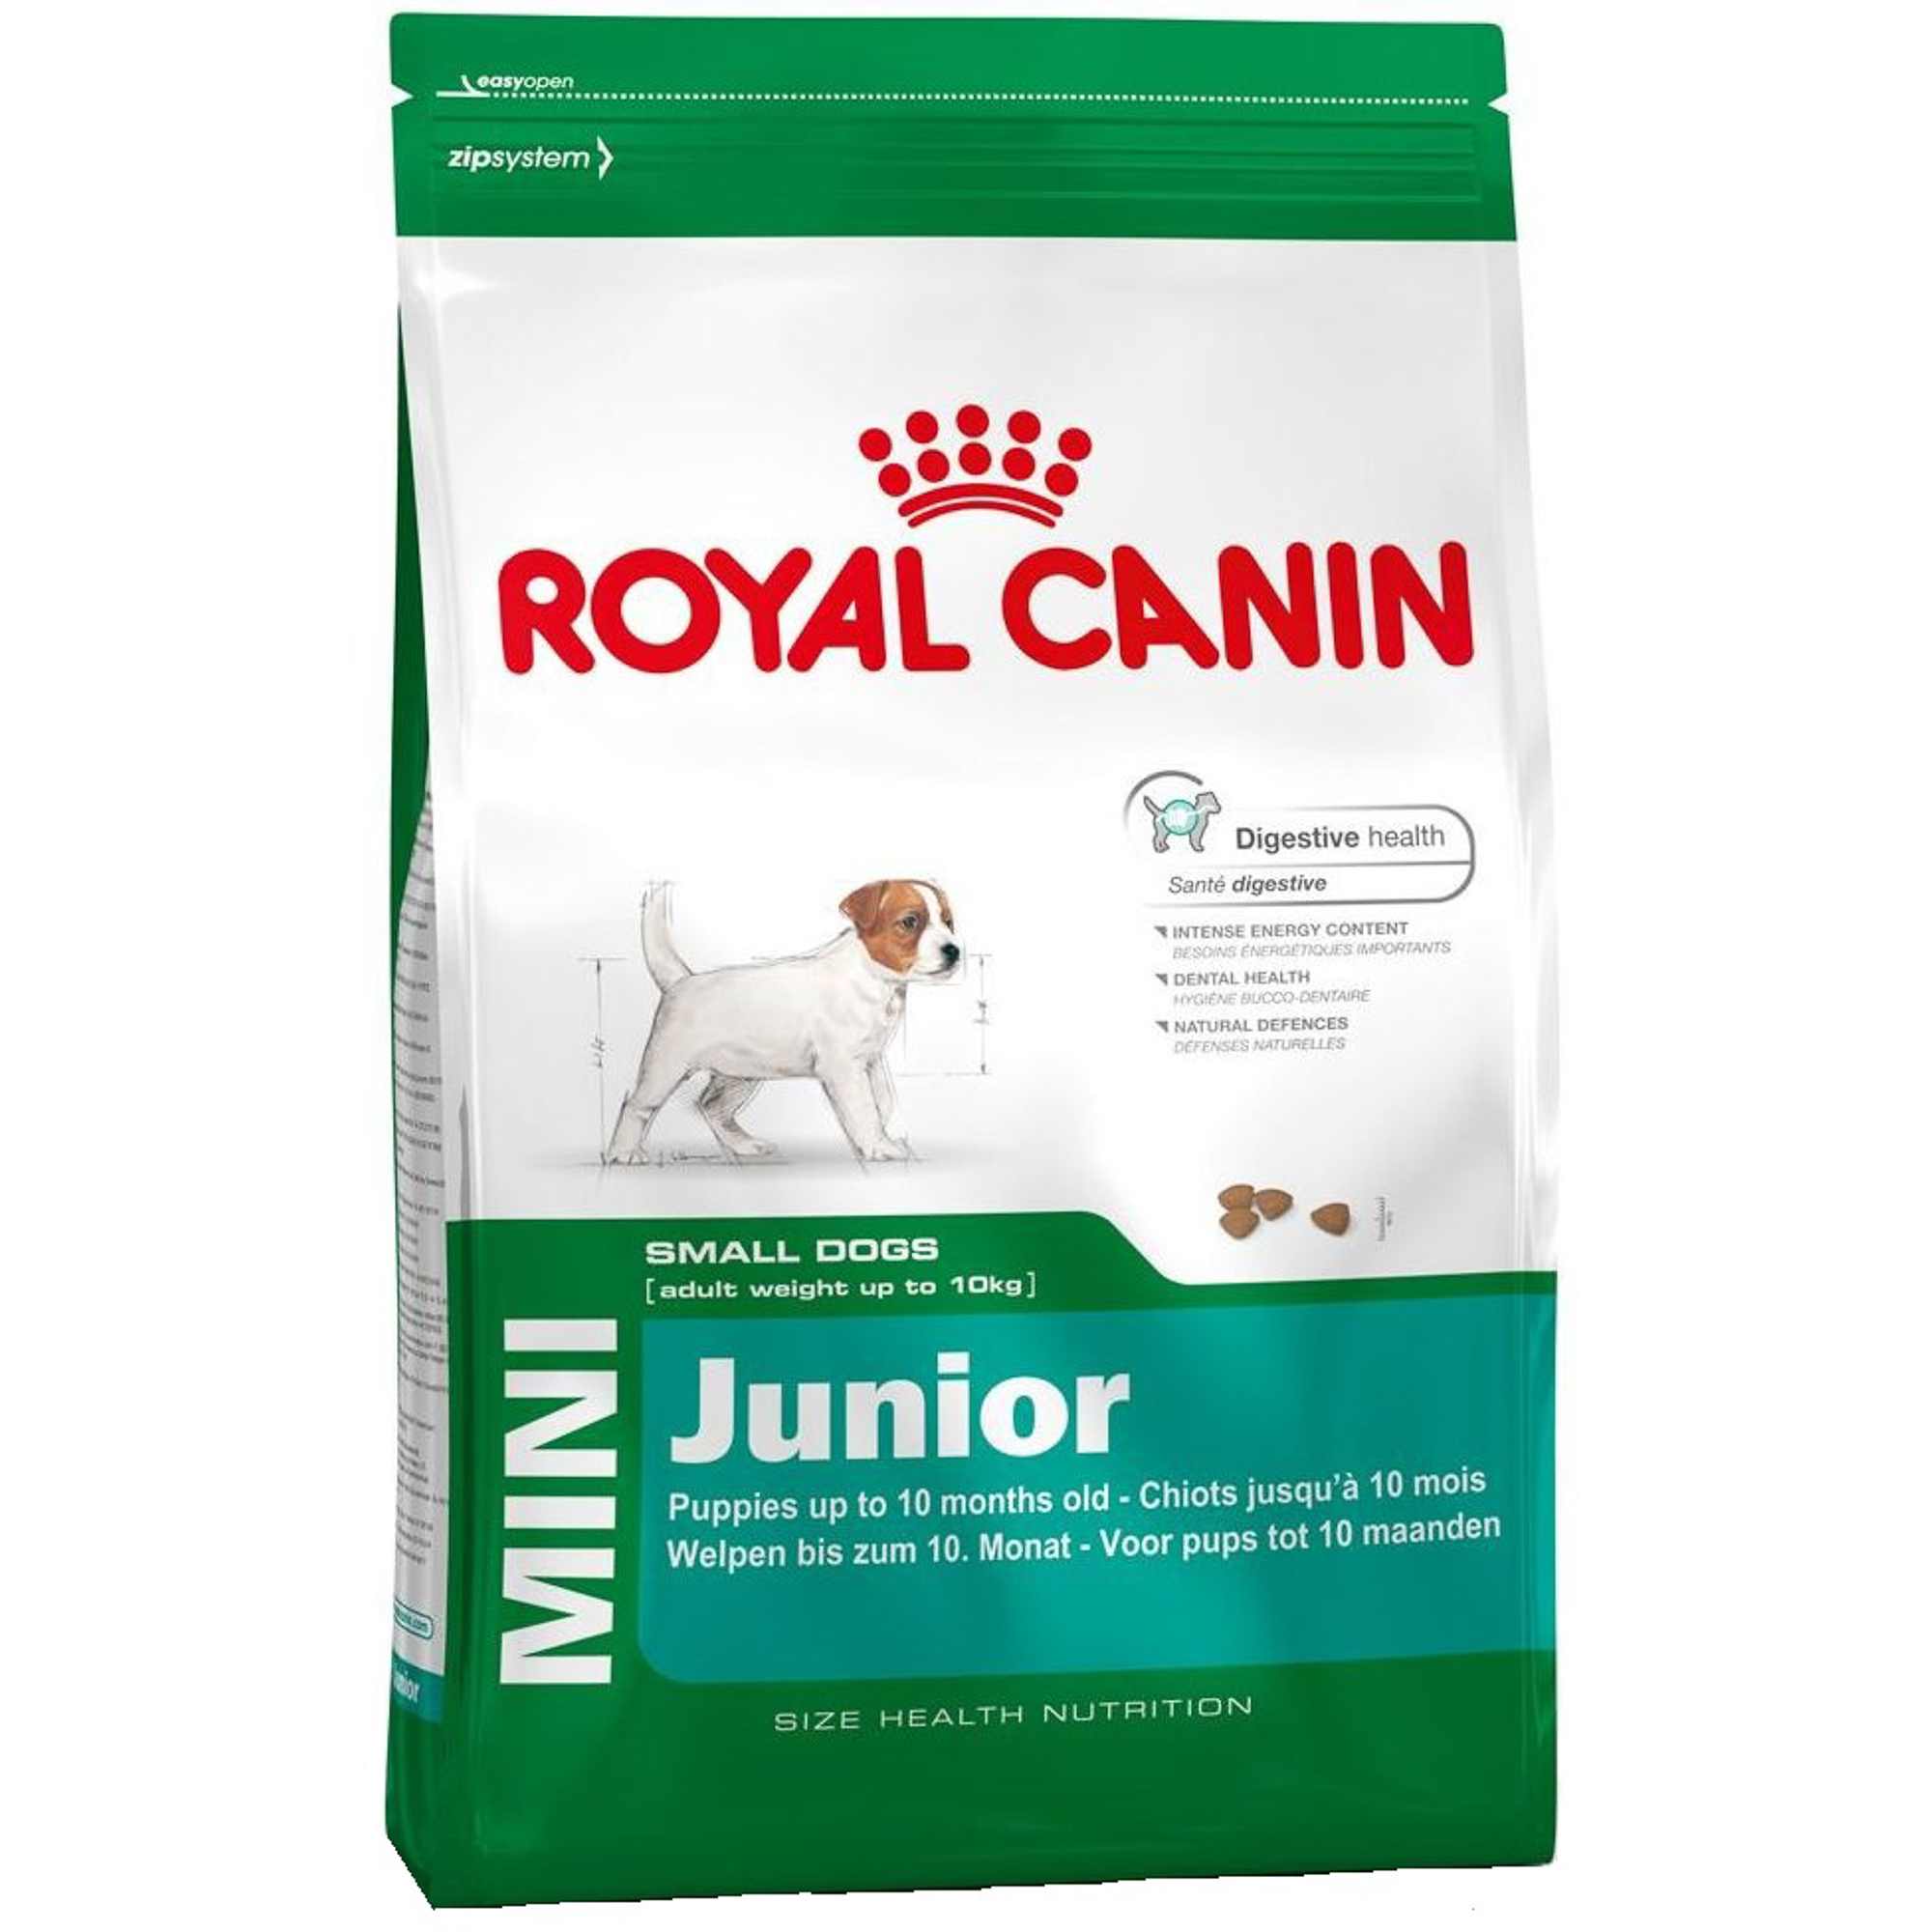 Корм для щенков Royal Canin JUNIOR для мелких пород, с 2 до 10 месяцев, 2 кг корм для собак royal canin size x small adult для миниатюрных пород от 10 месяцев до 8 лет птица 1 5 кг